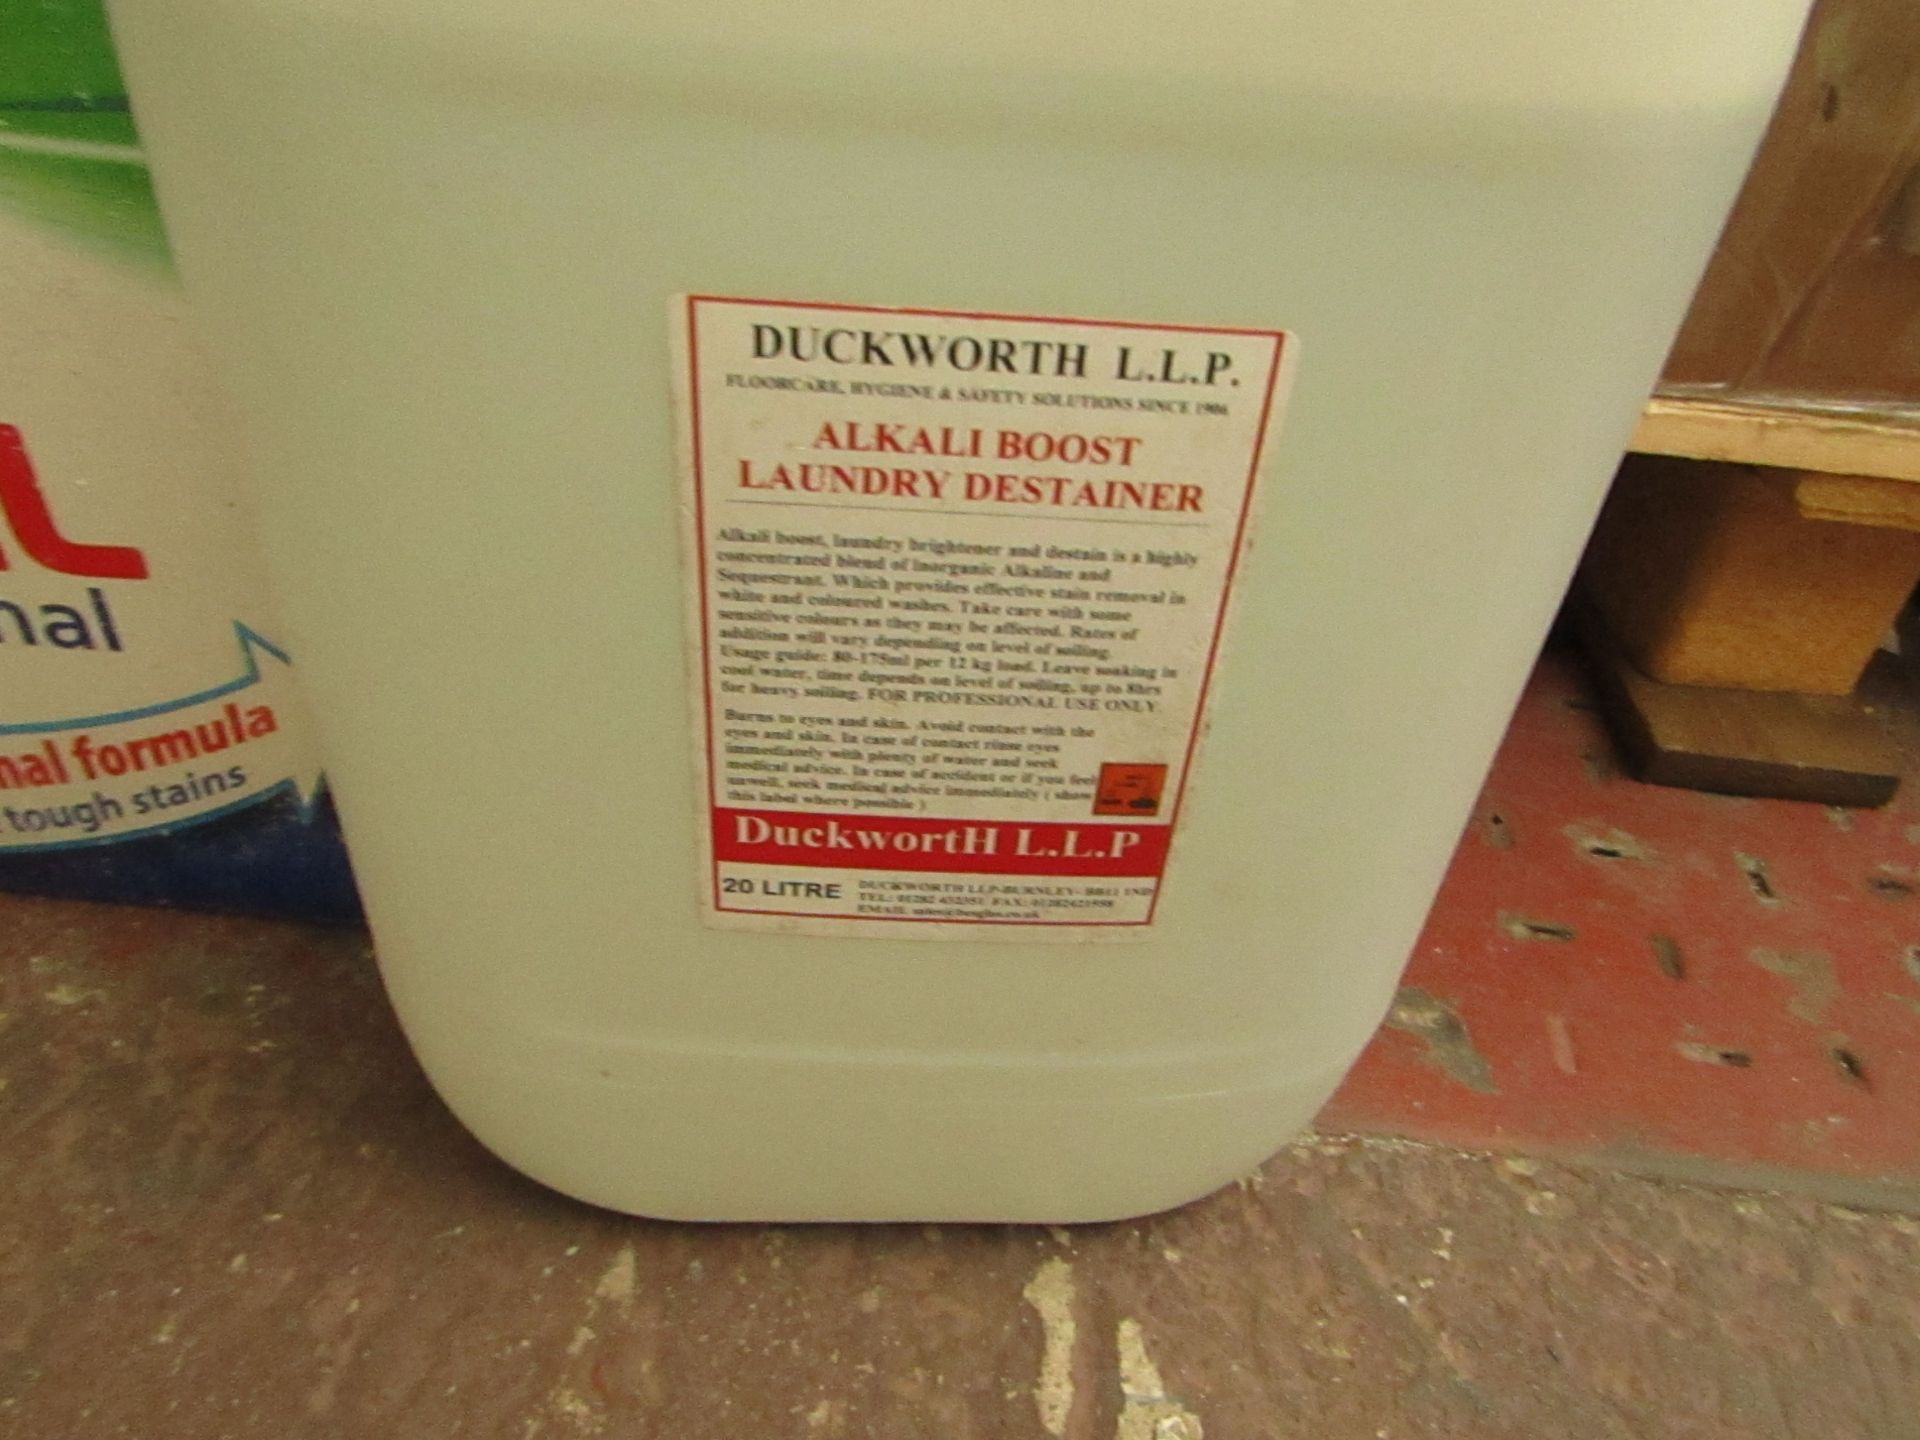 Duckworth Alkali Boost Laundry Destainer. 20 Litre tub.